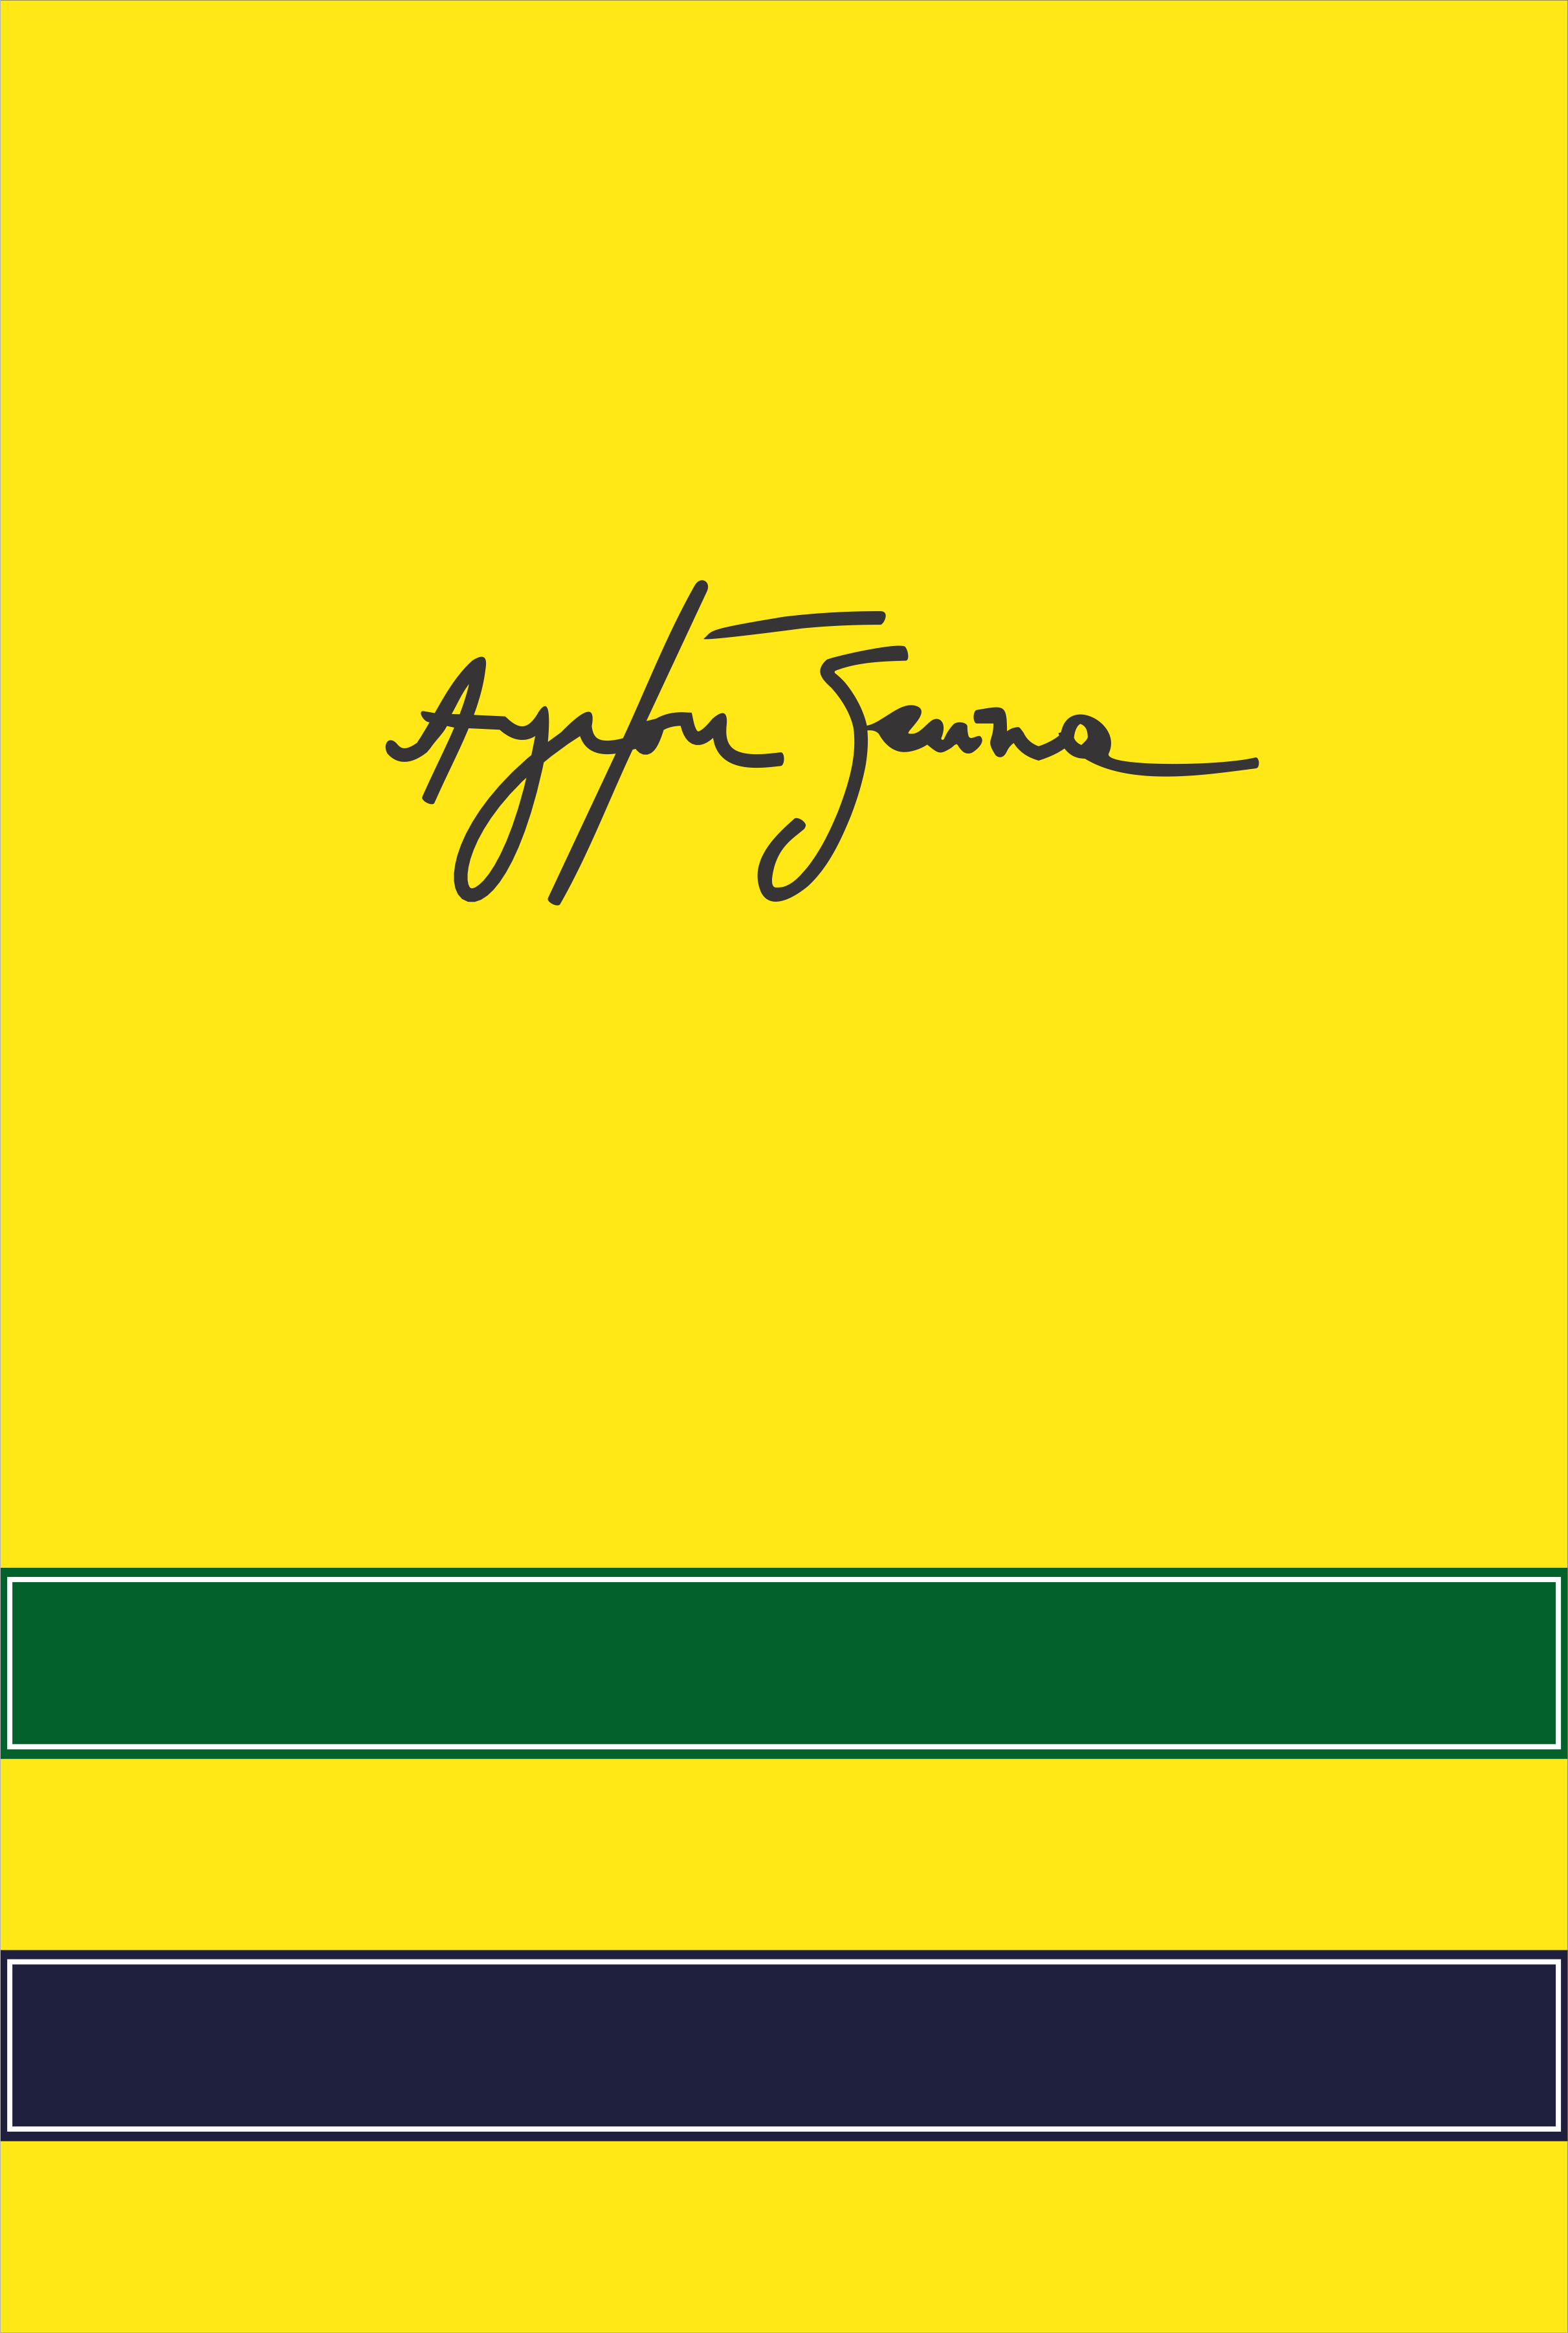 Assinatura Senna